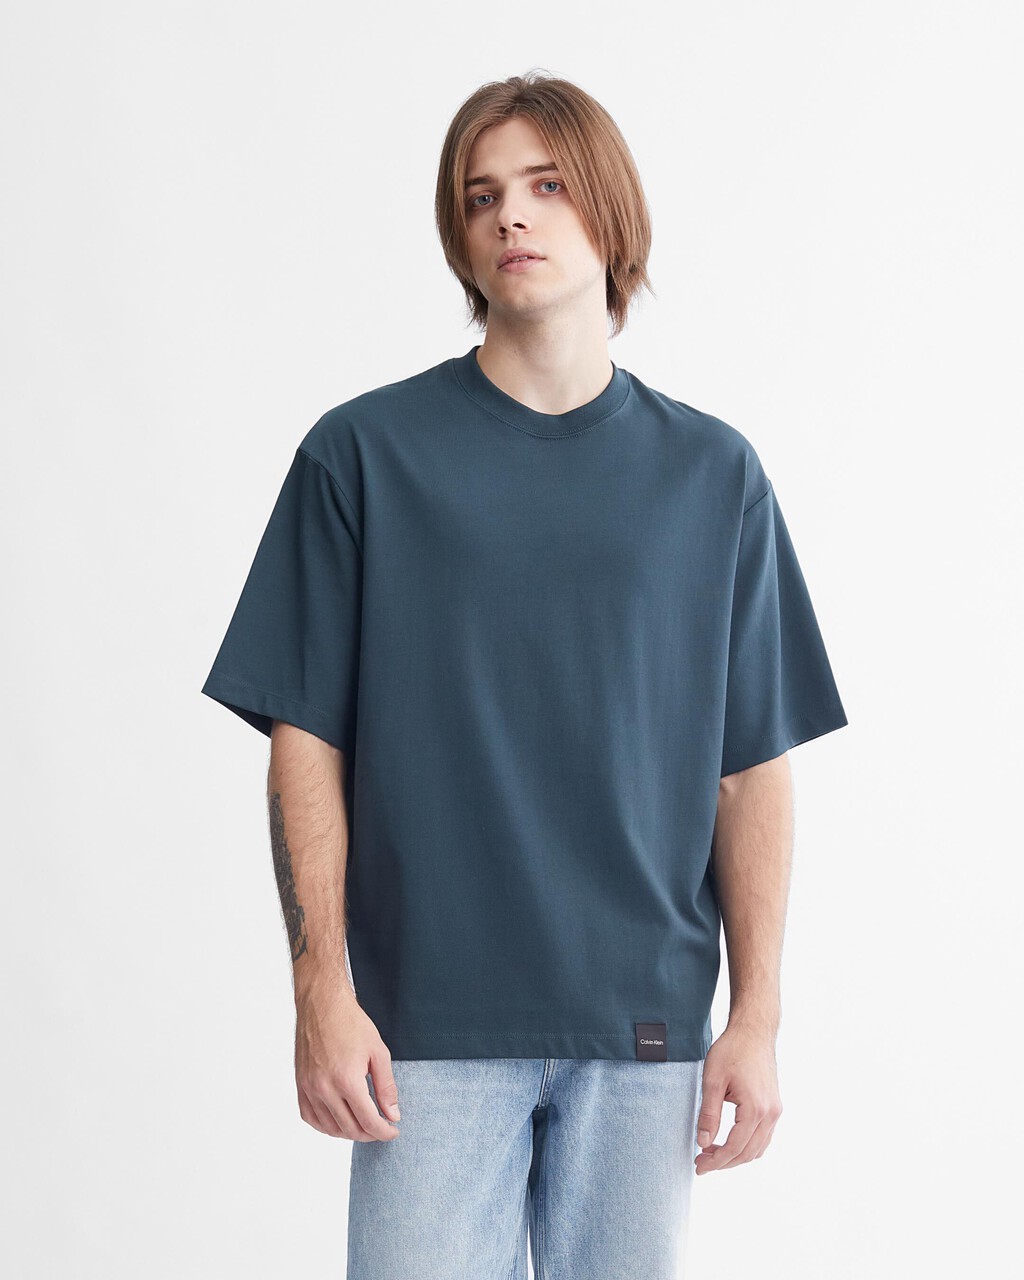 Standards Compact Cotton Crewneck T-Shirt, Magical Forest, hi-res